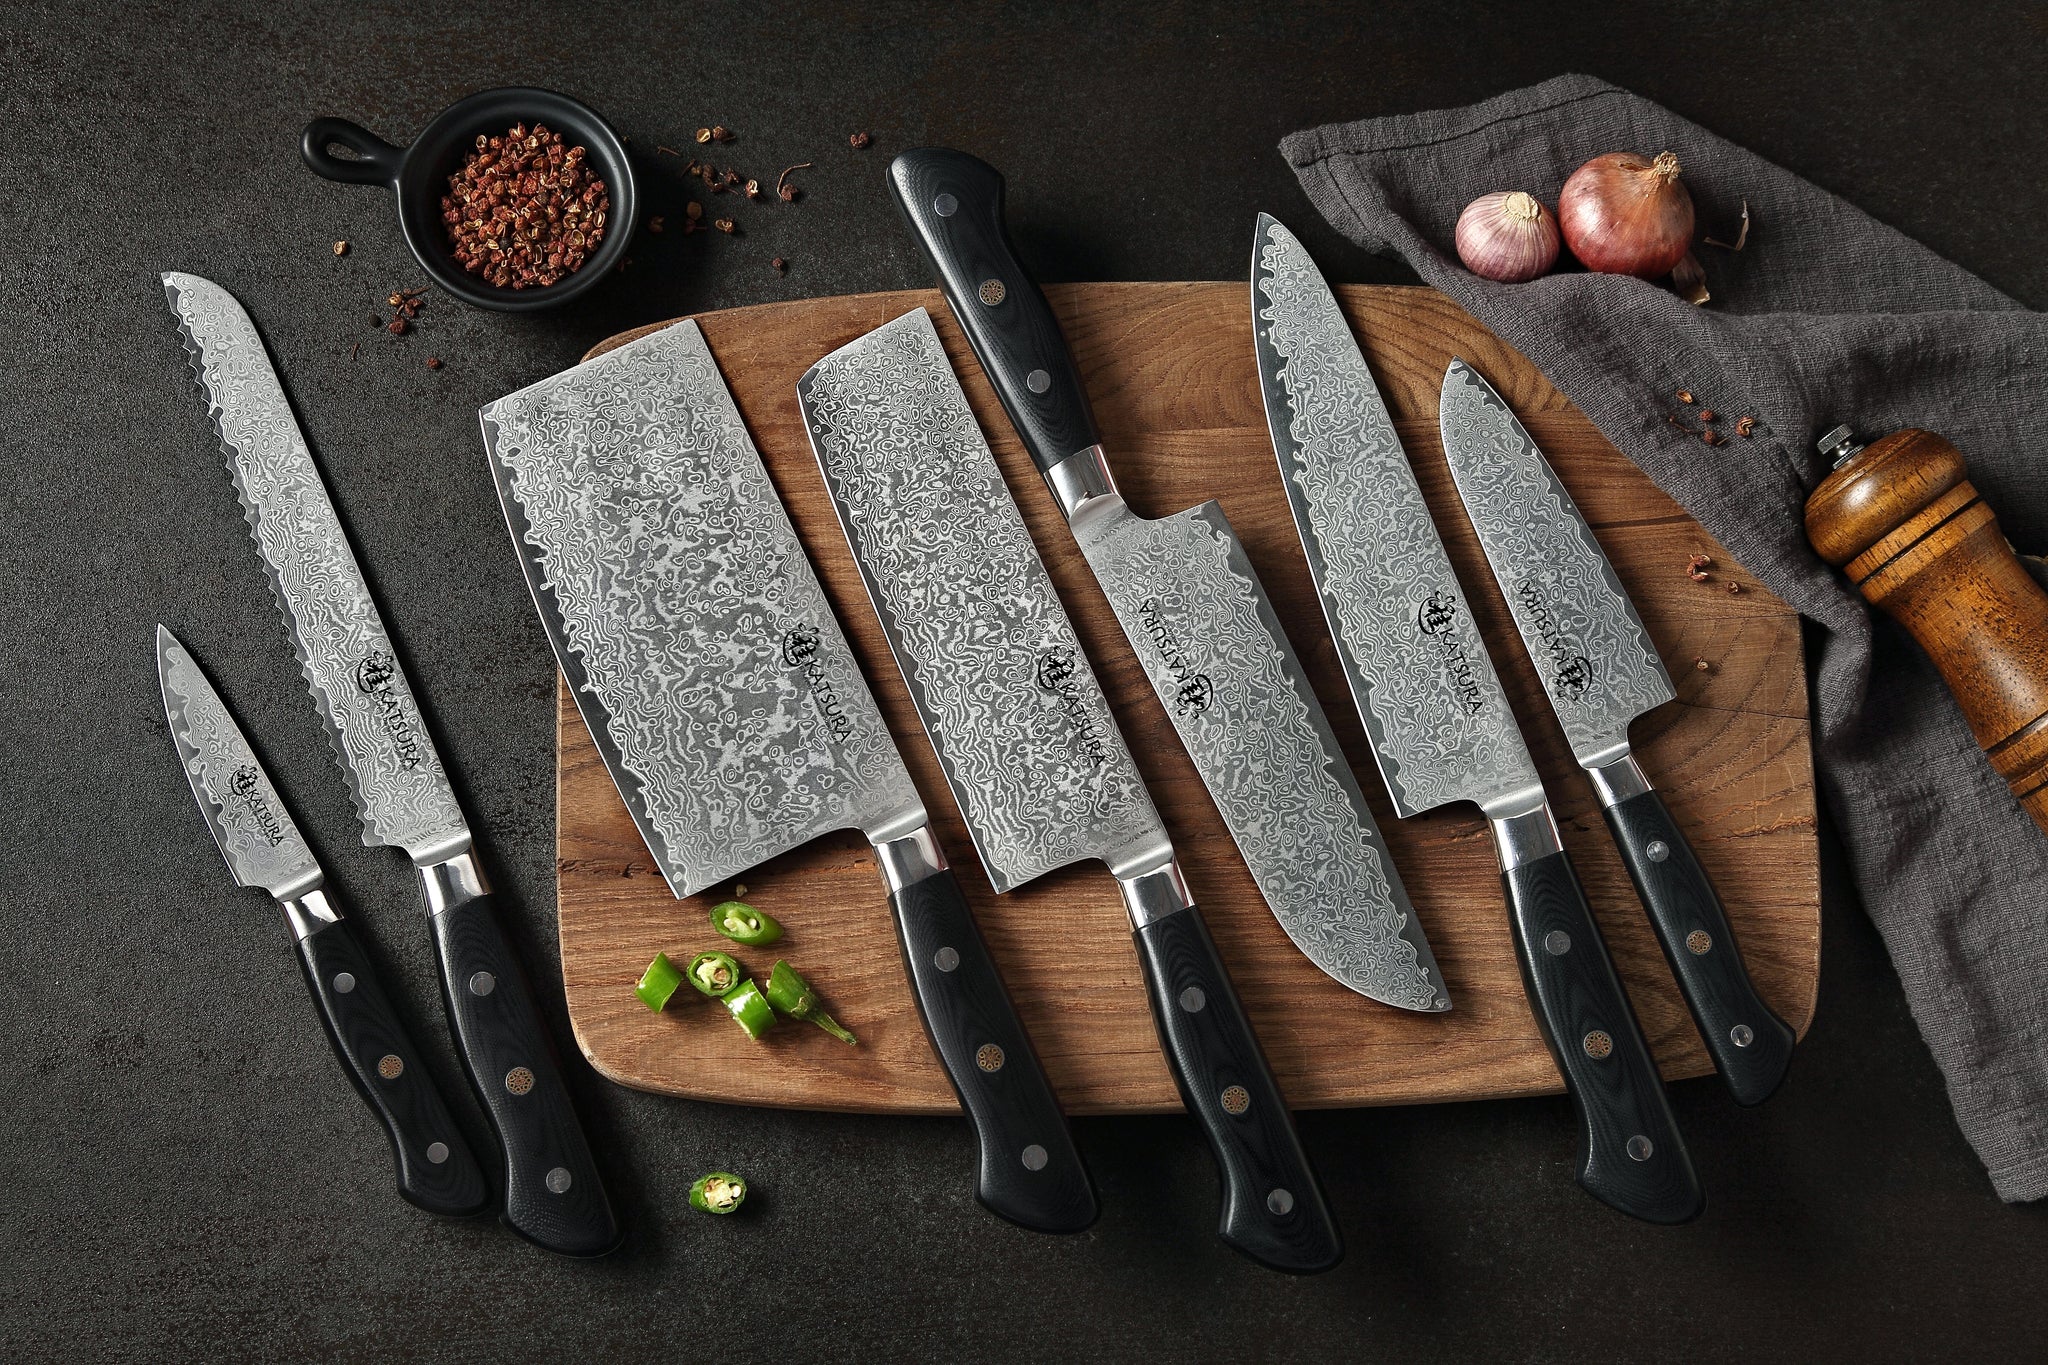 Mitsumoto Sakari 8 inch Japanese Gyuto Chef Knife, Professional Hand Forged Japanese Meat Knife, AUS-10 Premium Damascus Steel Kitchen Cooking Knife